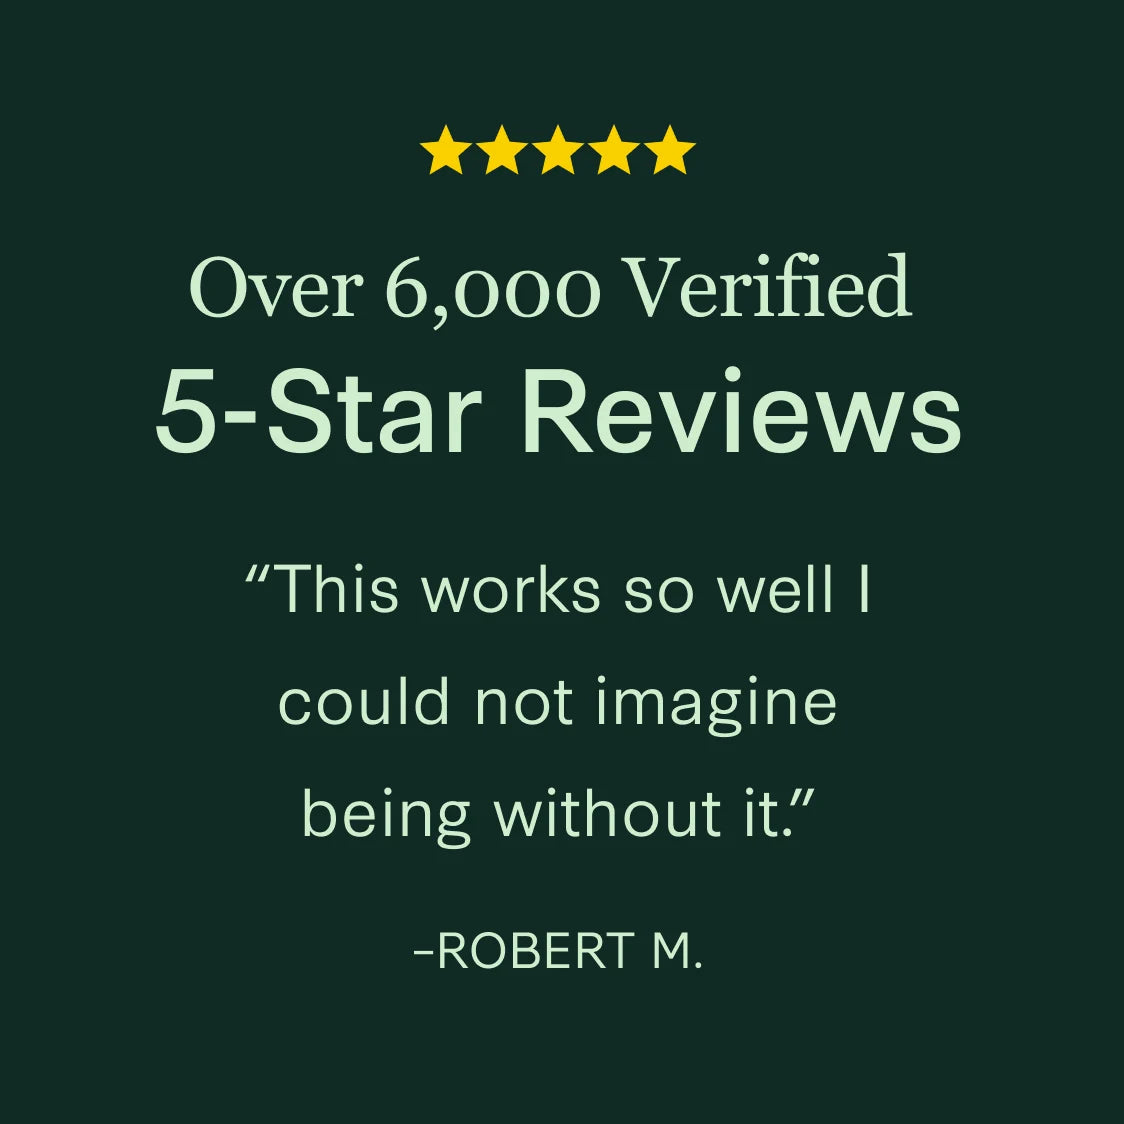 Over 6,000 verified 5-star reviews.